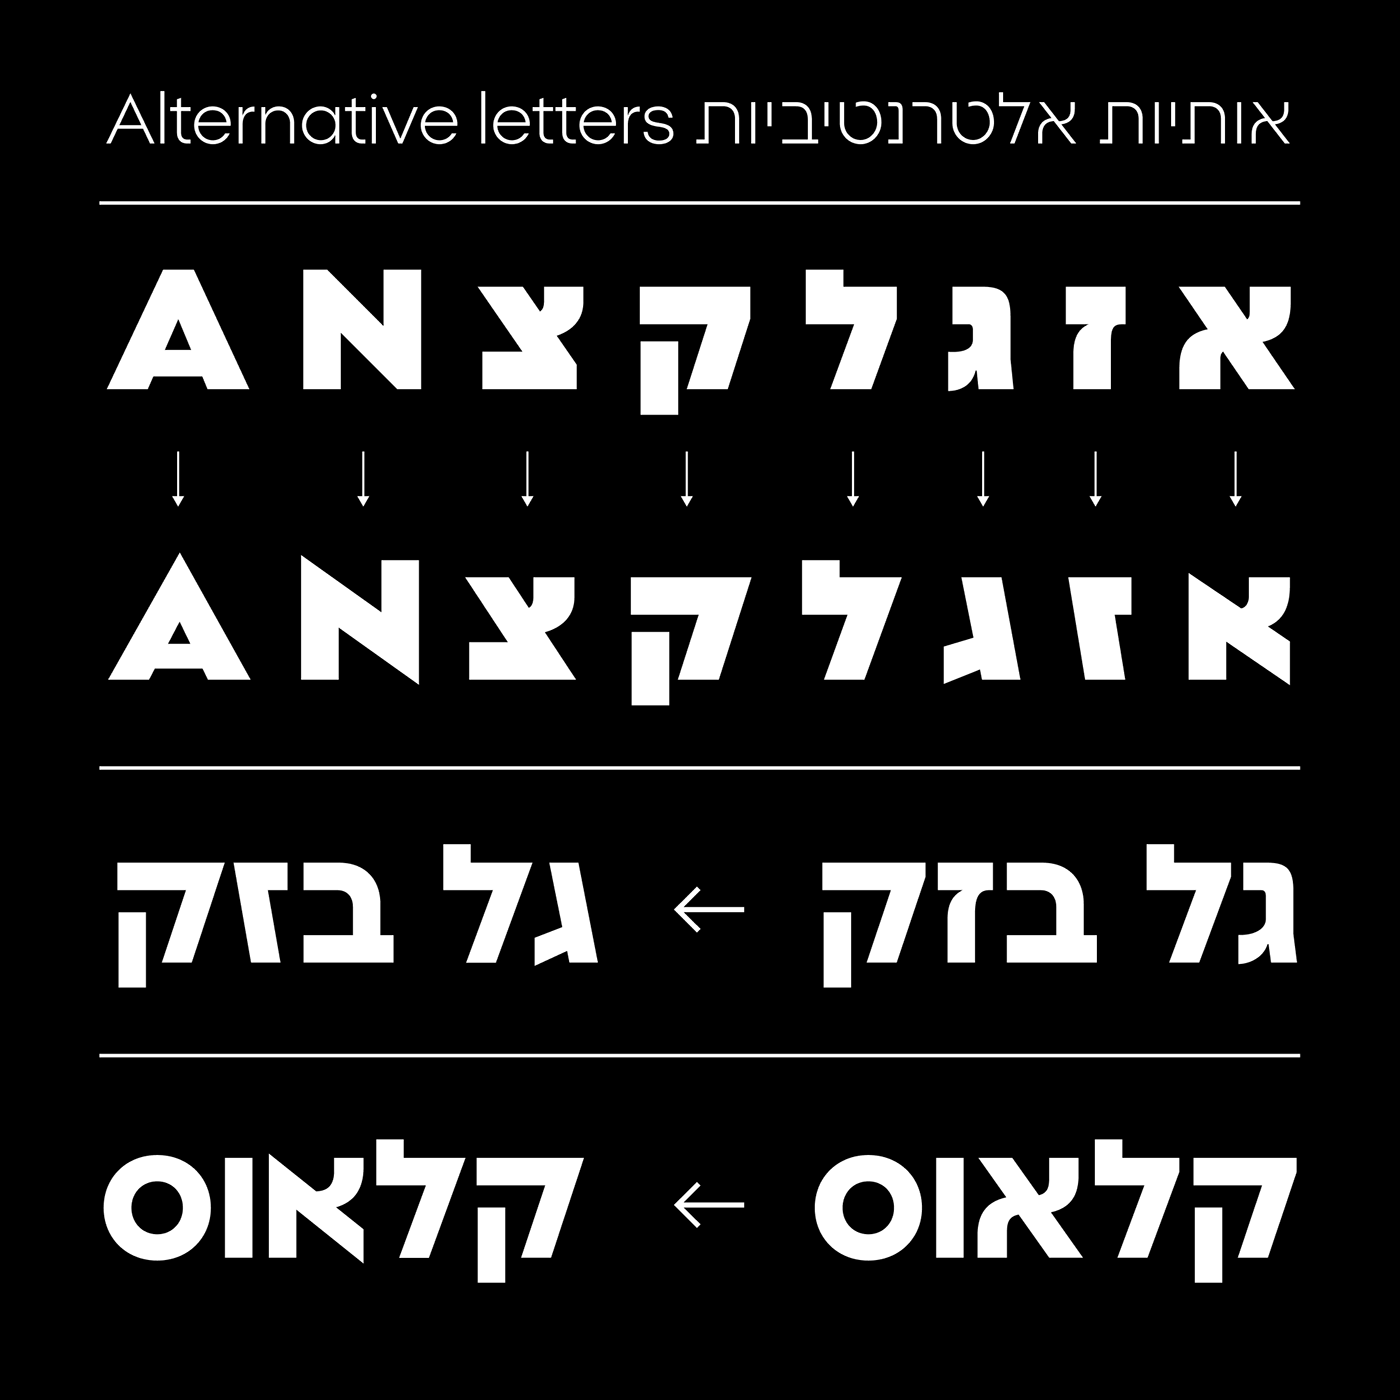 polin hebrew geometric font modernism branding  israel poland Cyrillic greek multiscript font